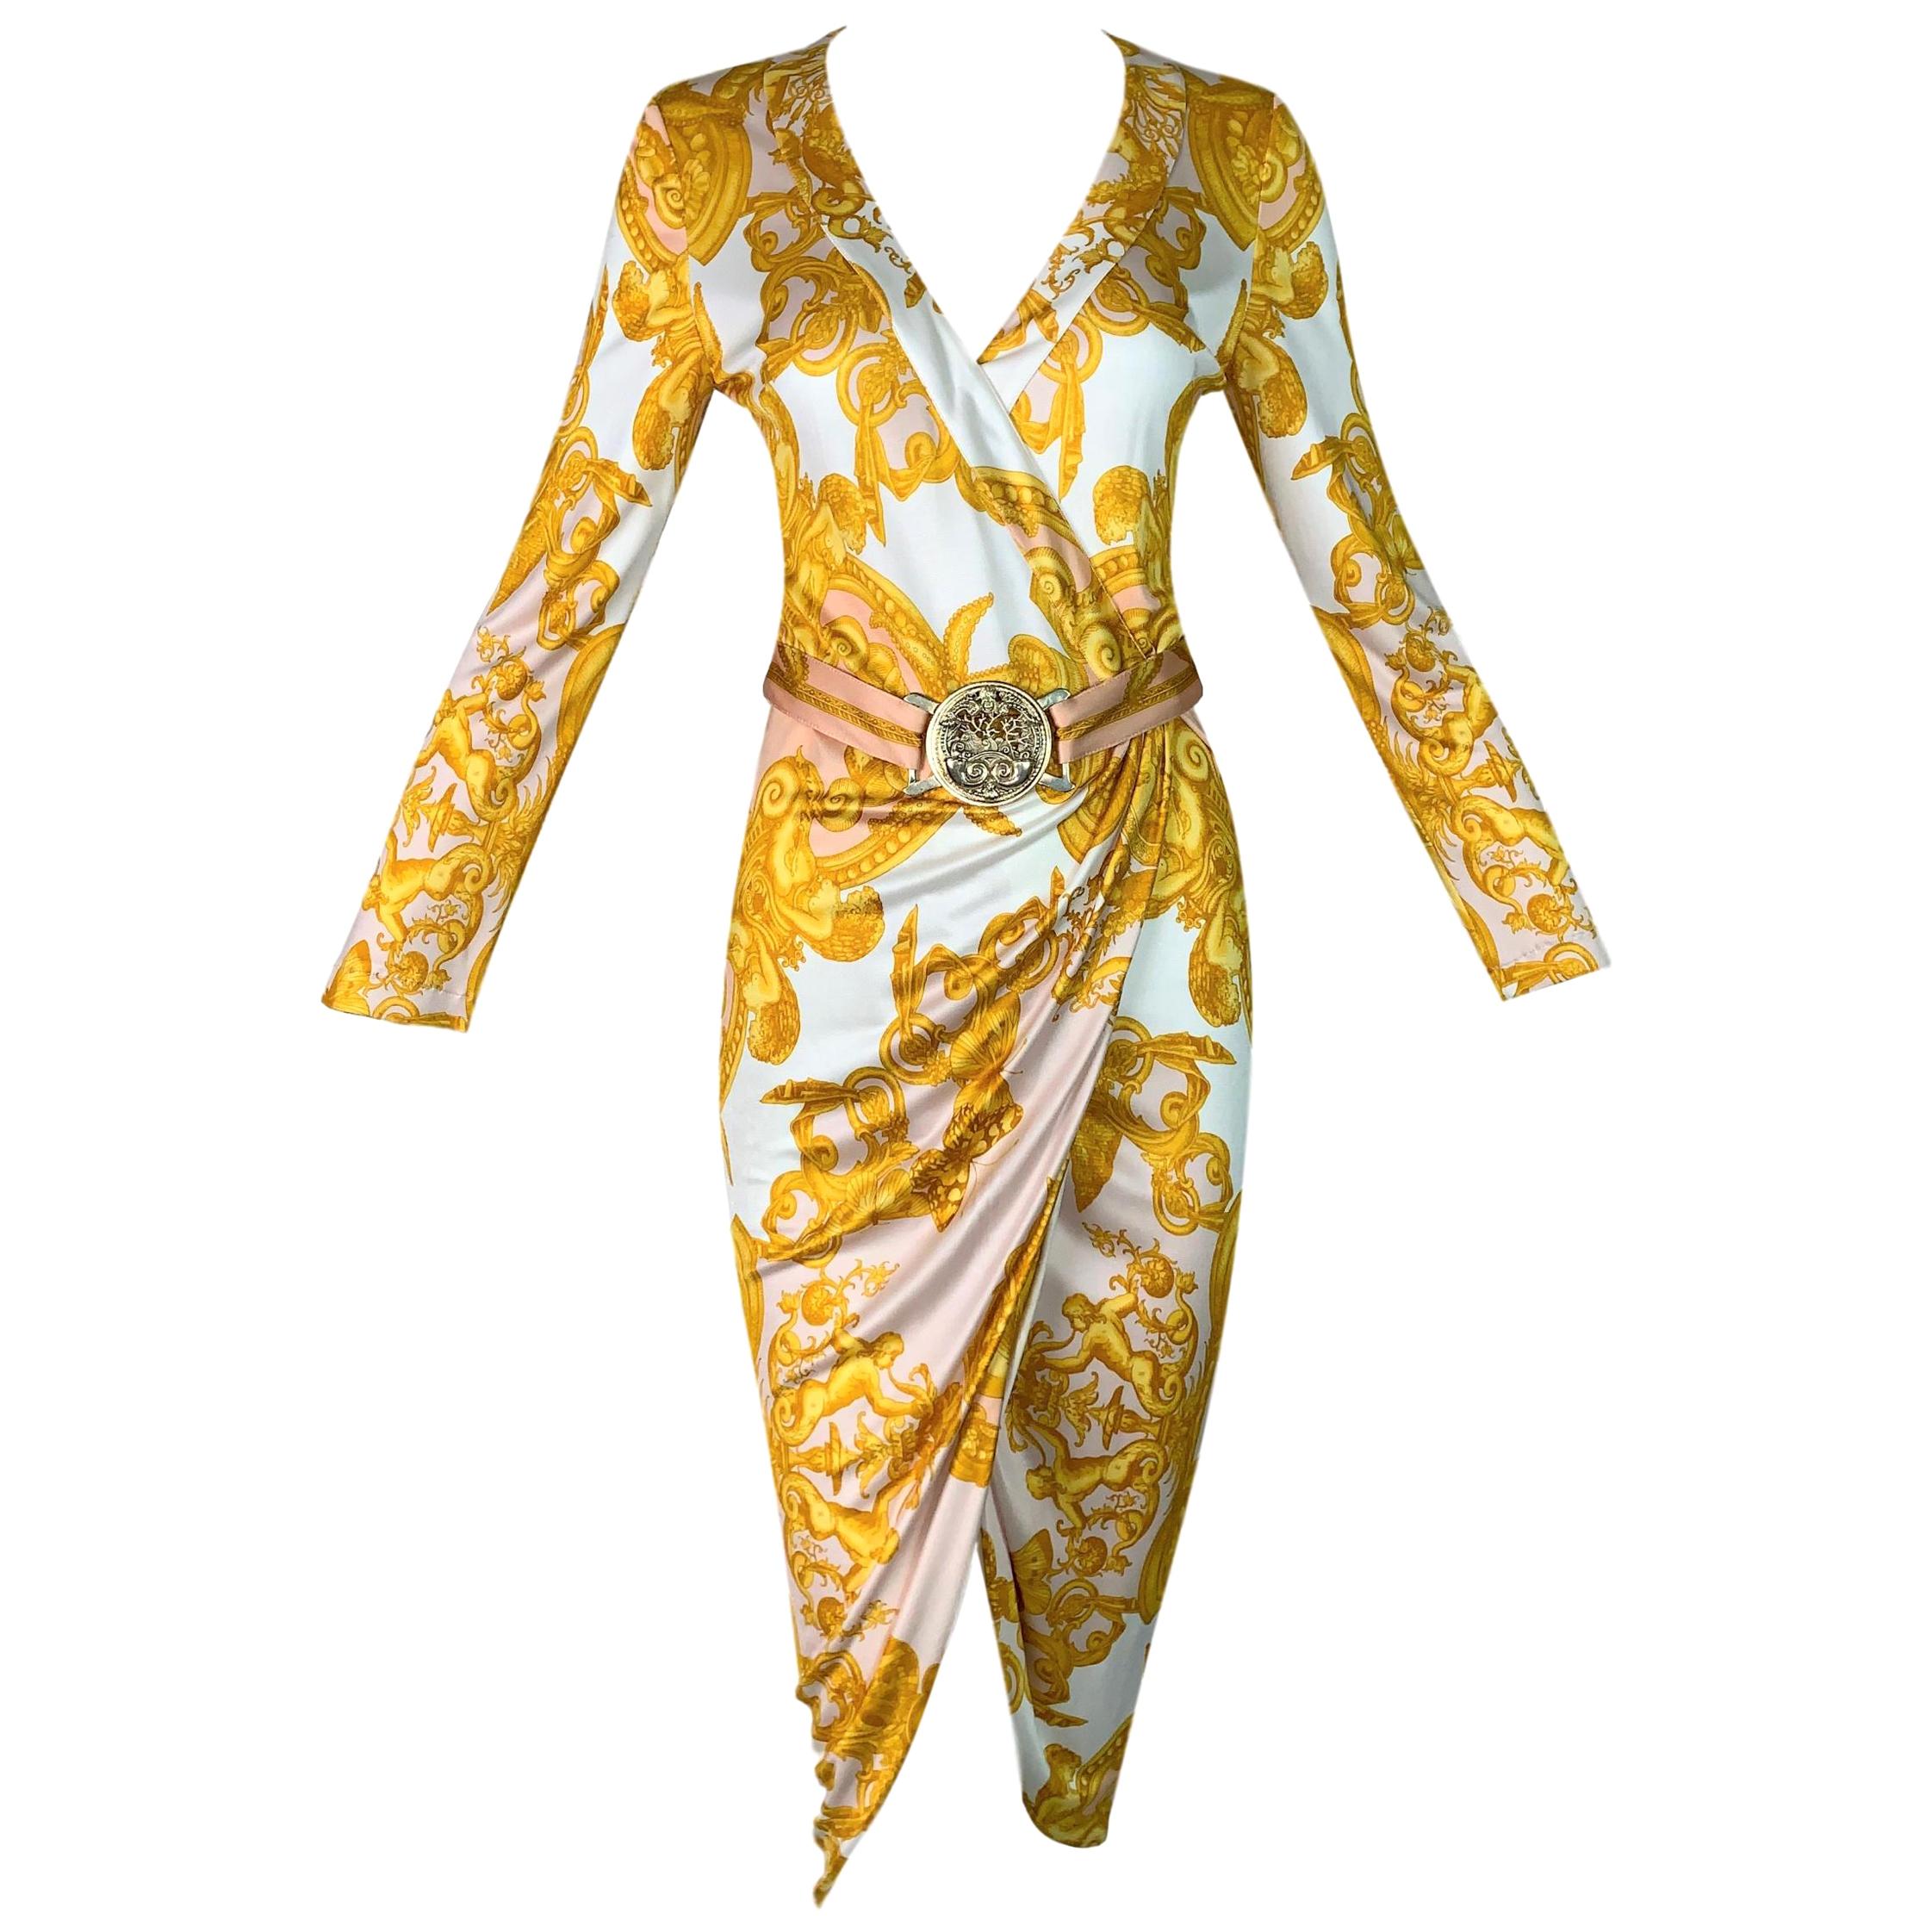 S/S 2005 Versace Runway 70's Style Gold Baroque Wrap Dress